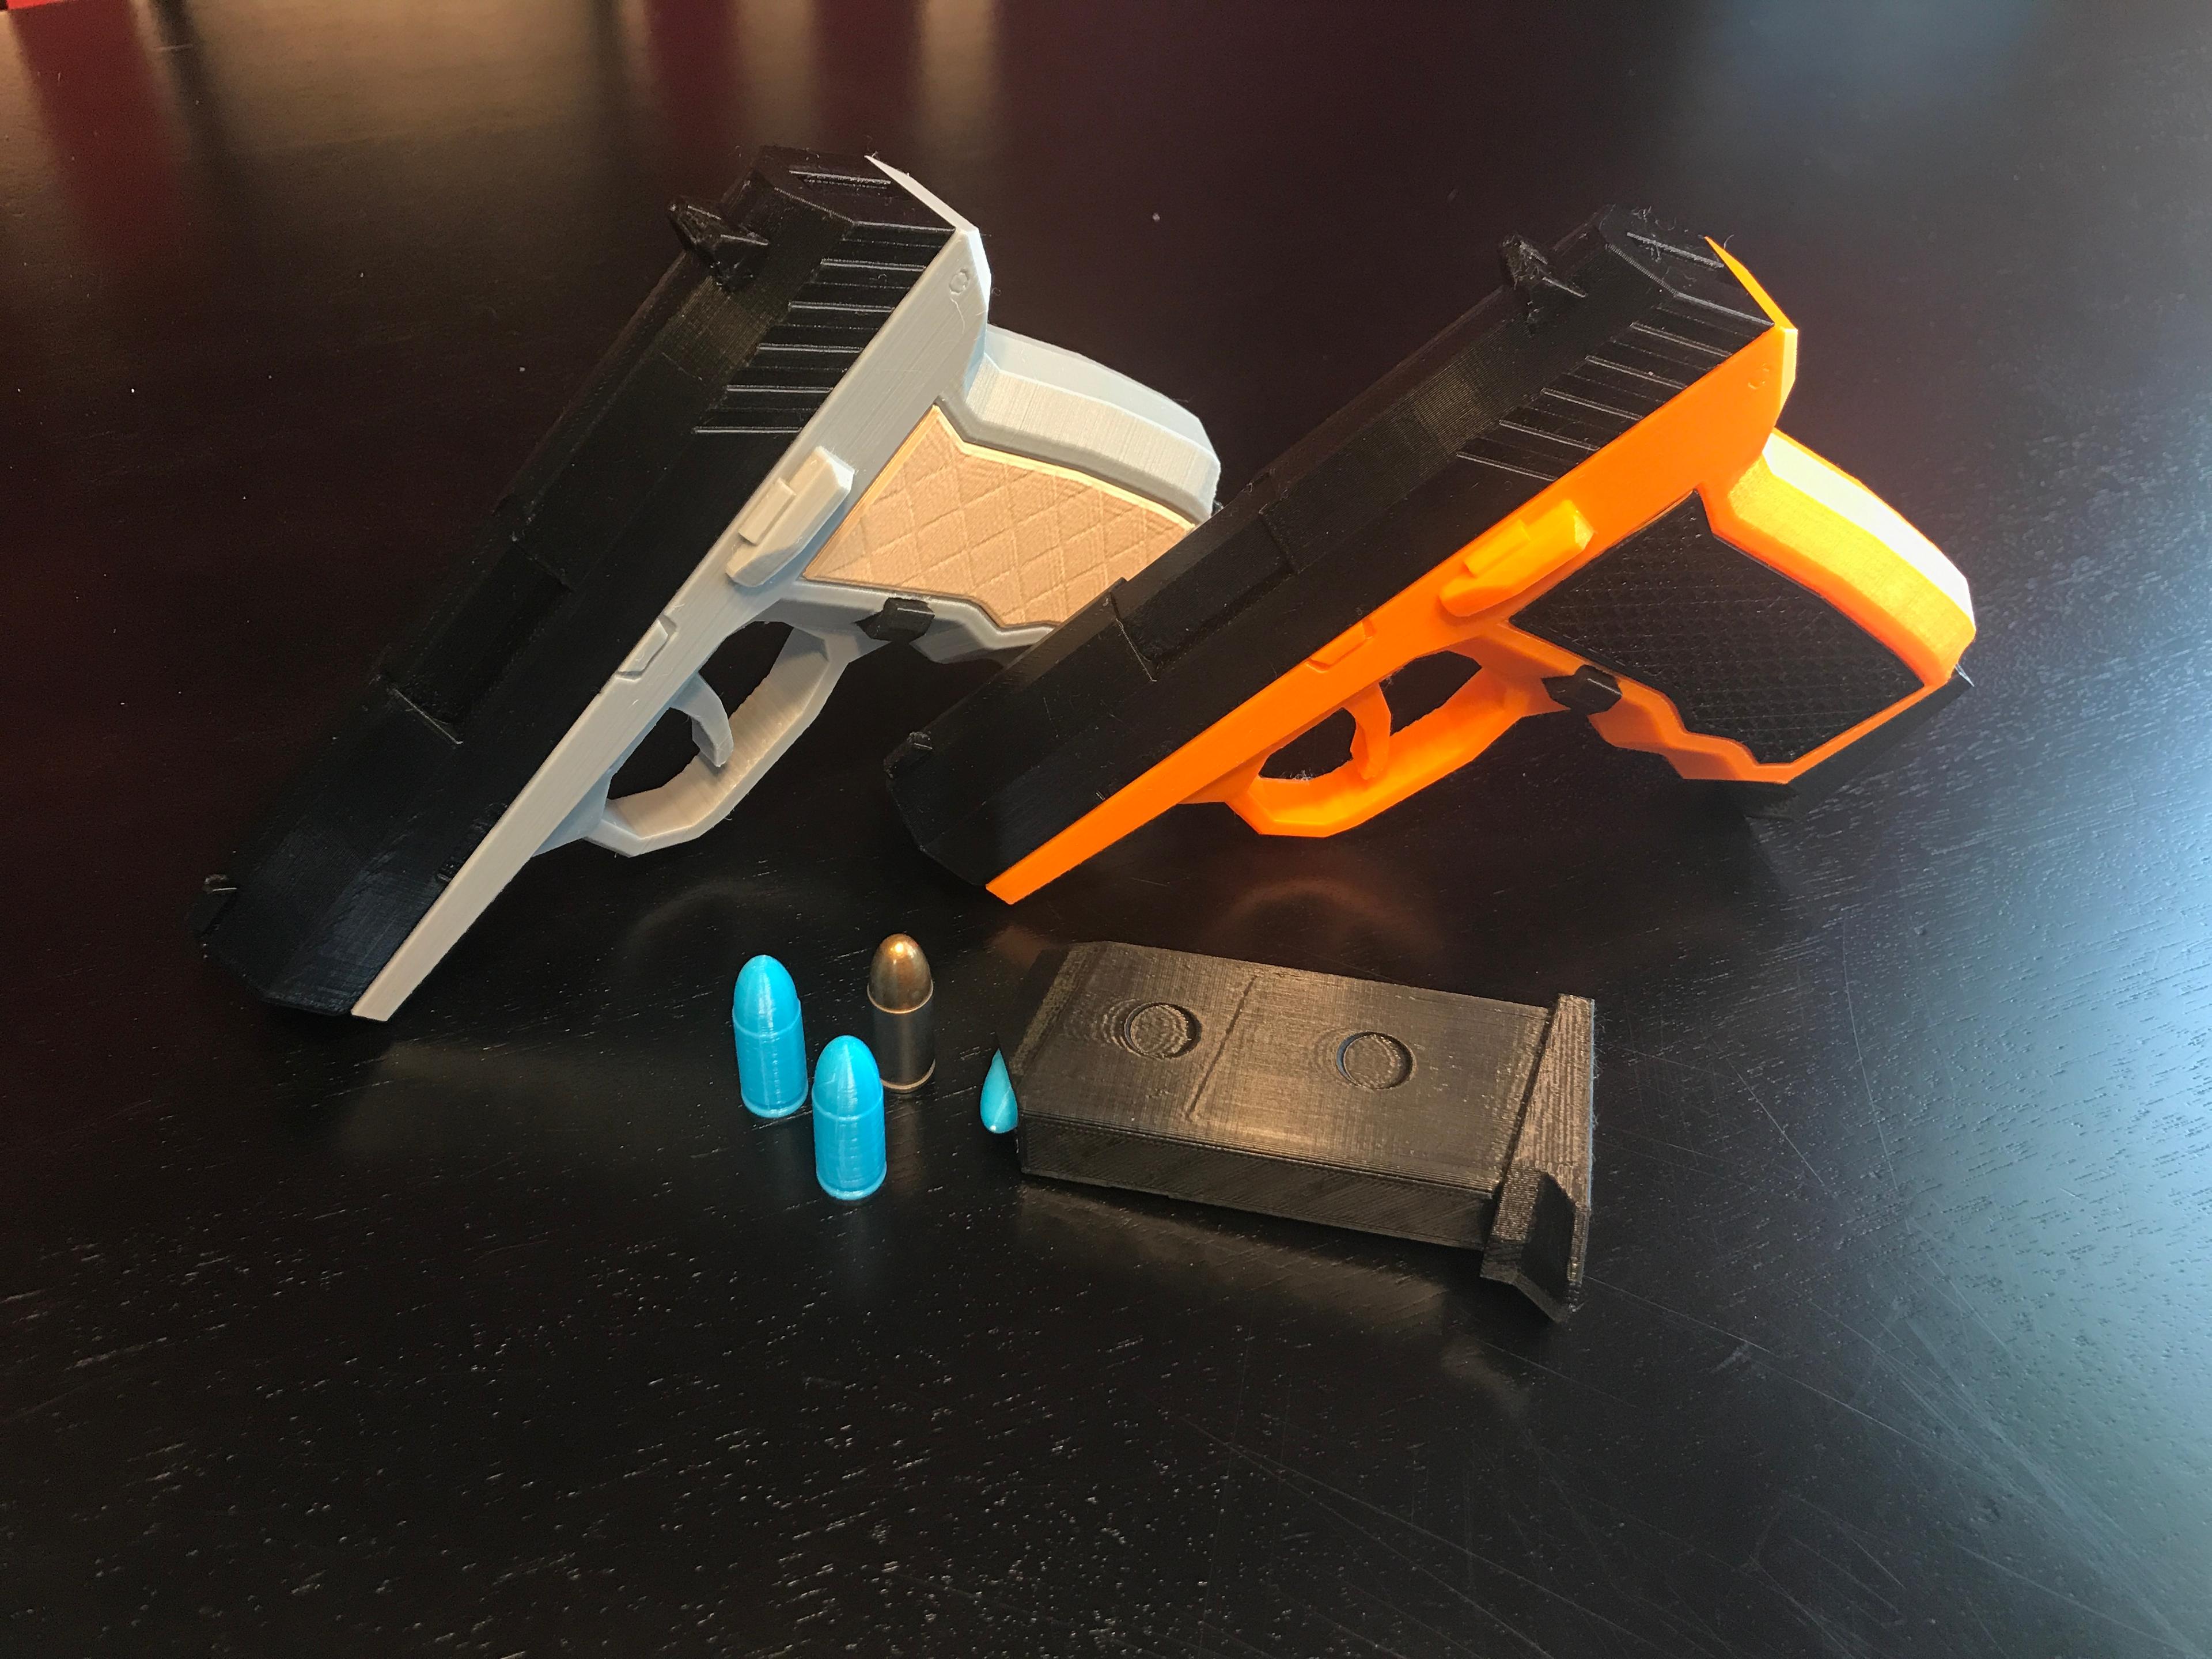 CPX-2 Prop Gun v2.1 (+Prop Mag, Silencer +Custom Grips) 3d model